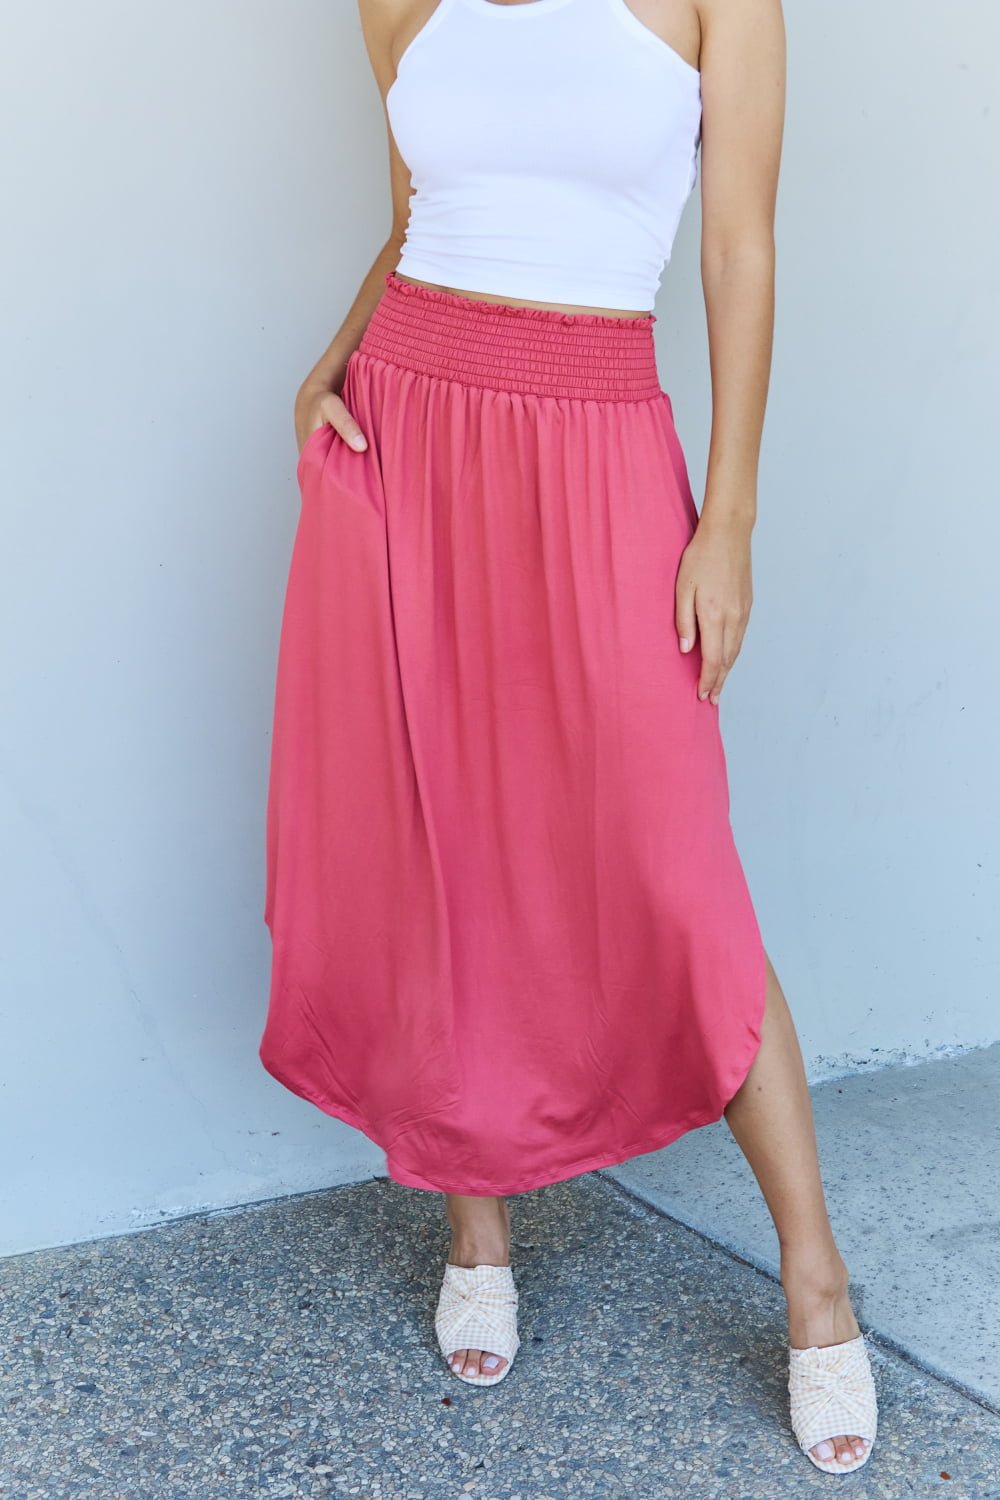 Doublju Comfort Princess Full Size High Waist Scoop Hem Maxi Skirt in Hot Pink - pvmark